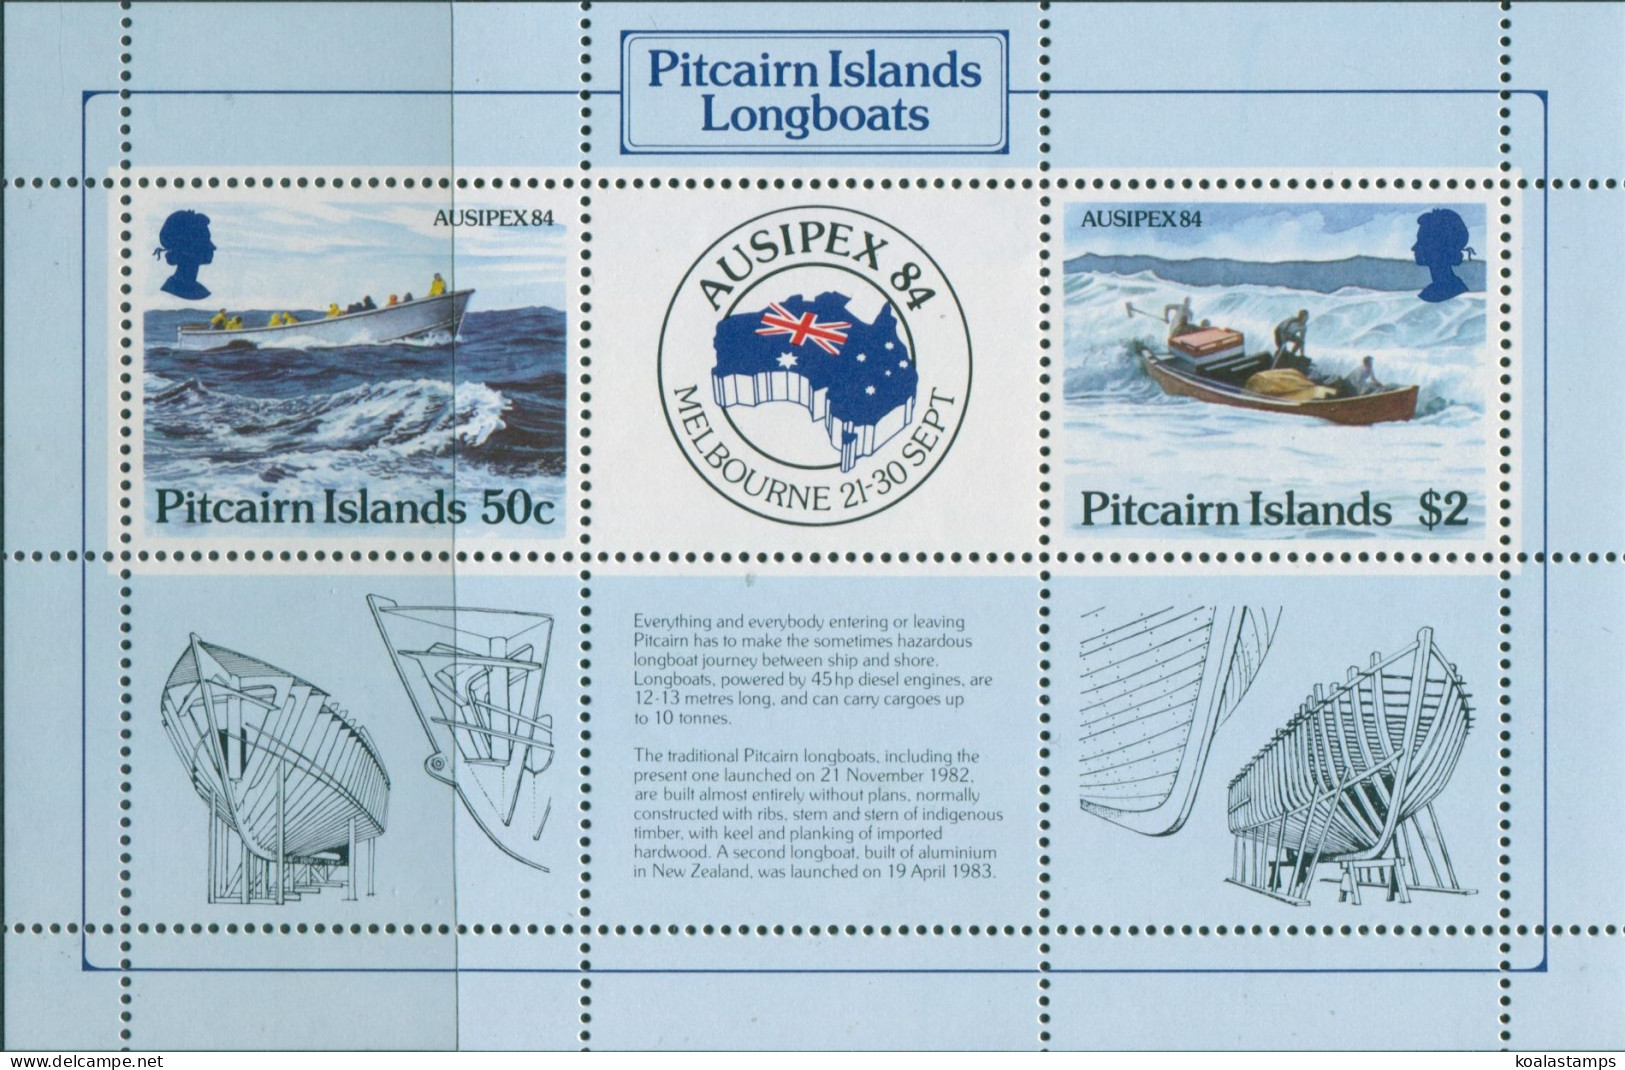 Pitcairn Islands 1984 SG263 Ausipex Longboats MS MNH - Pitcairn